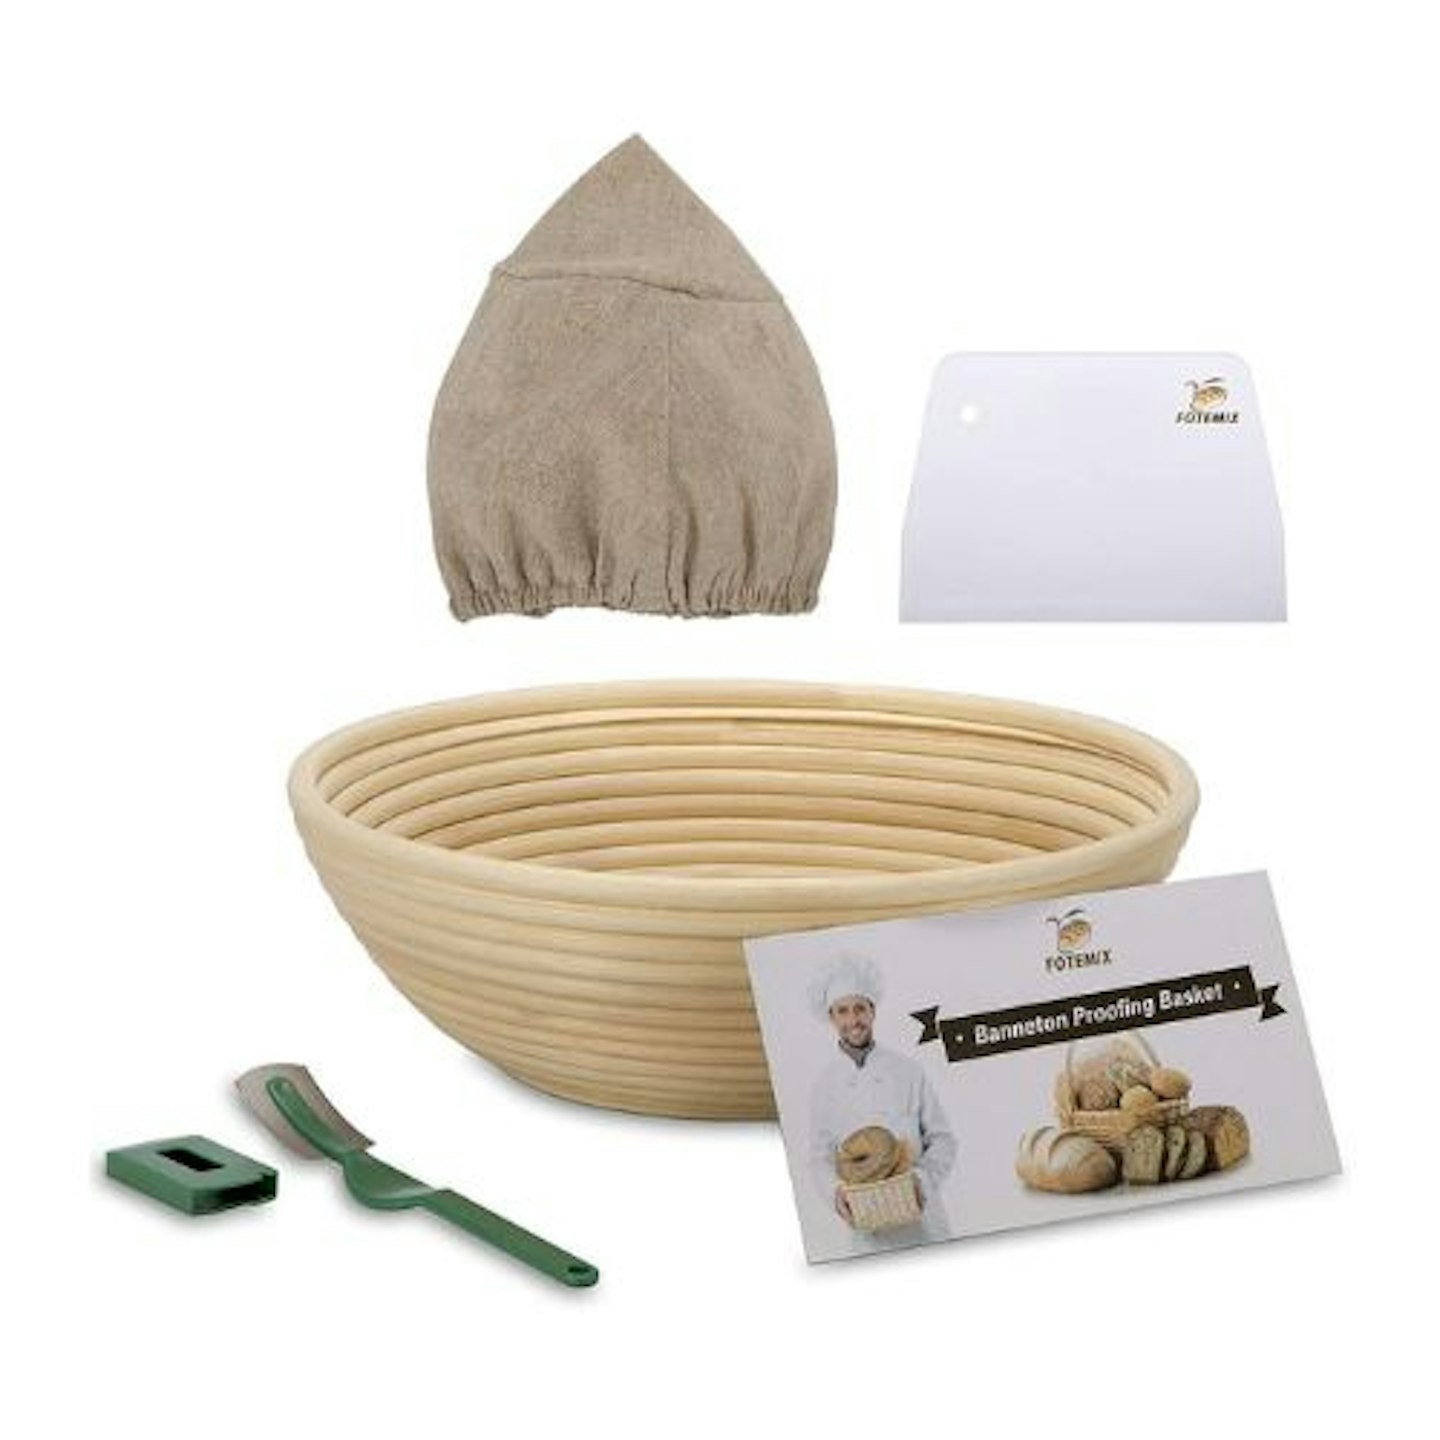 Round Bread Proofing Basket